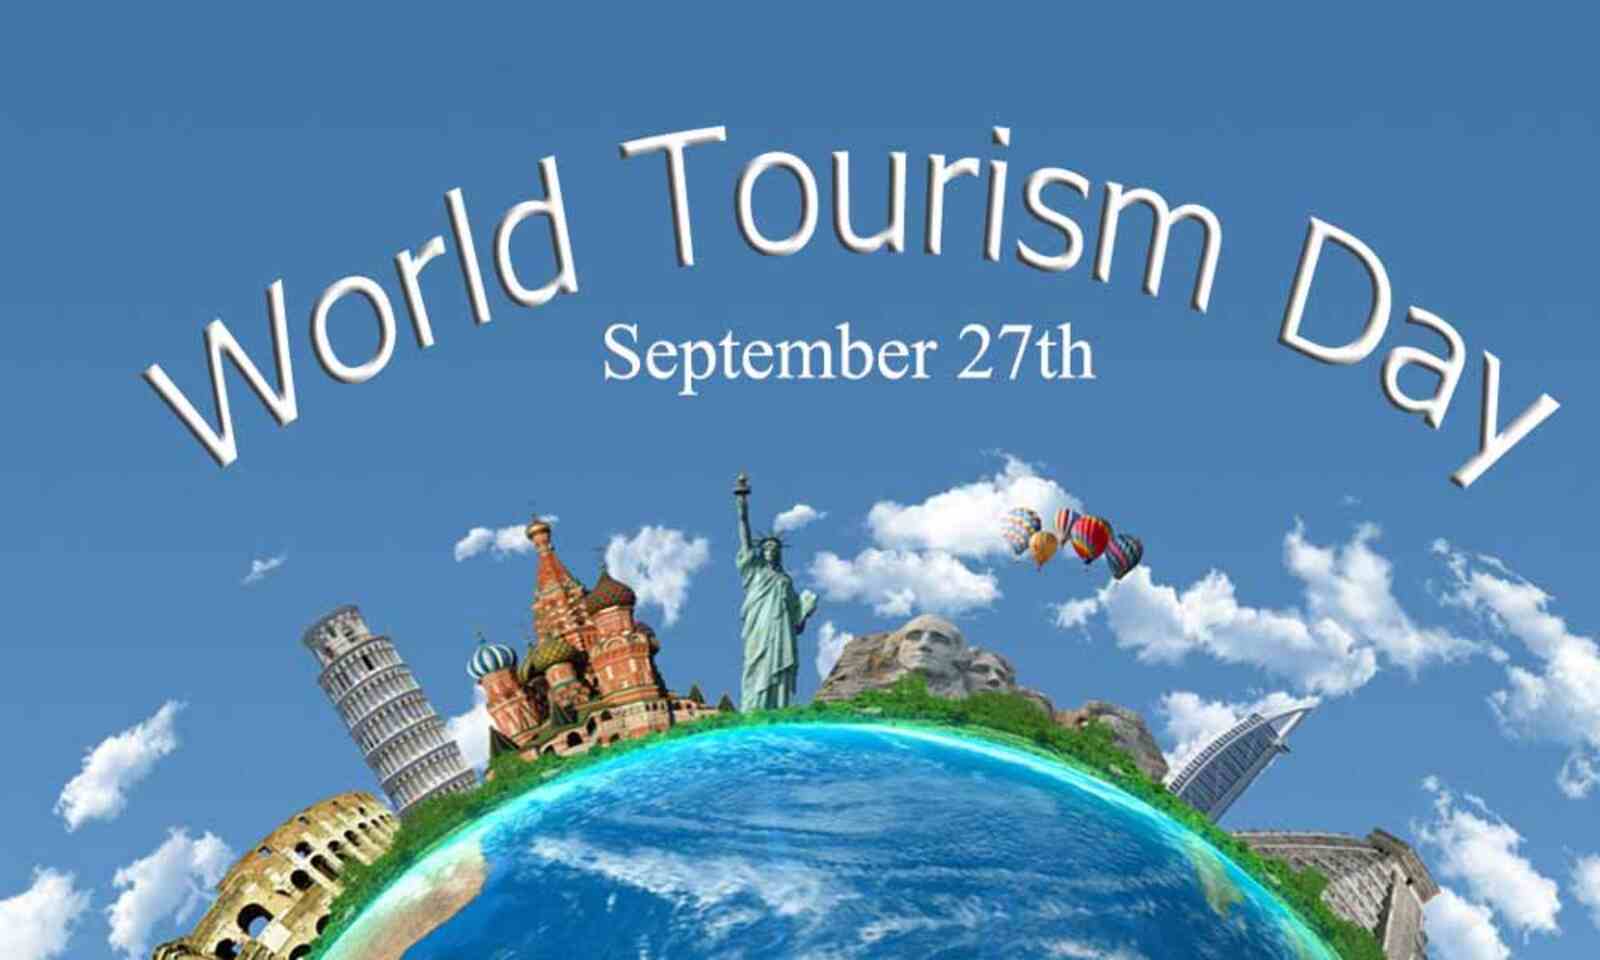 Happy Tourism Day